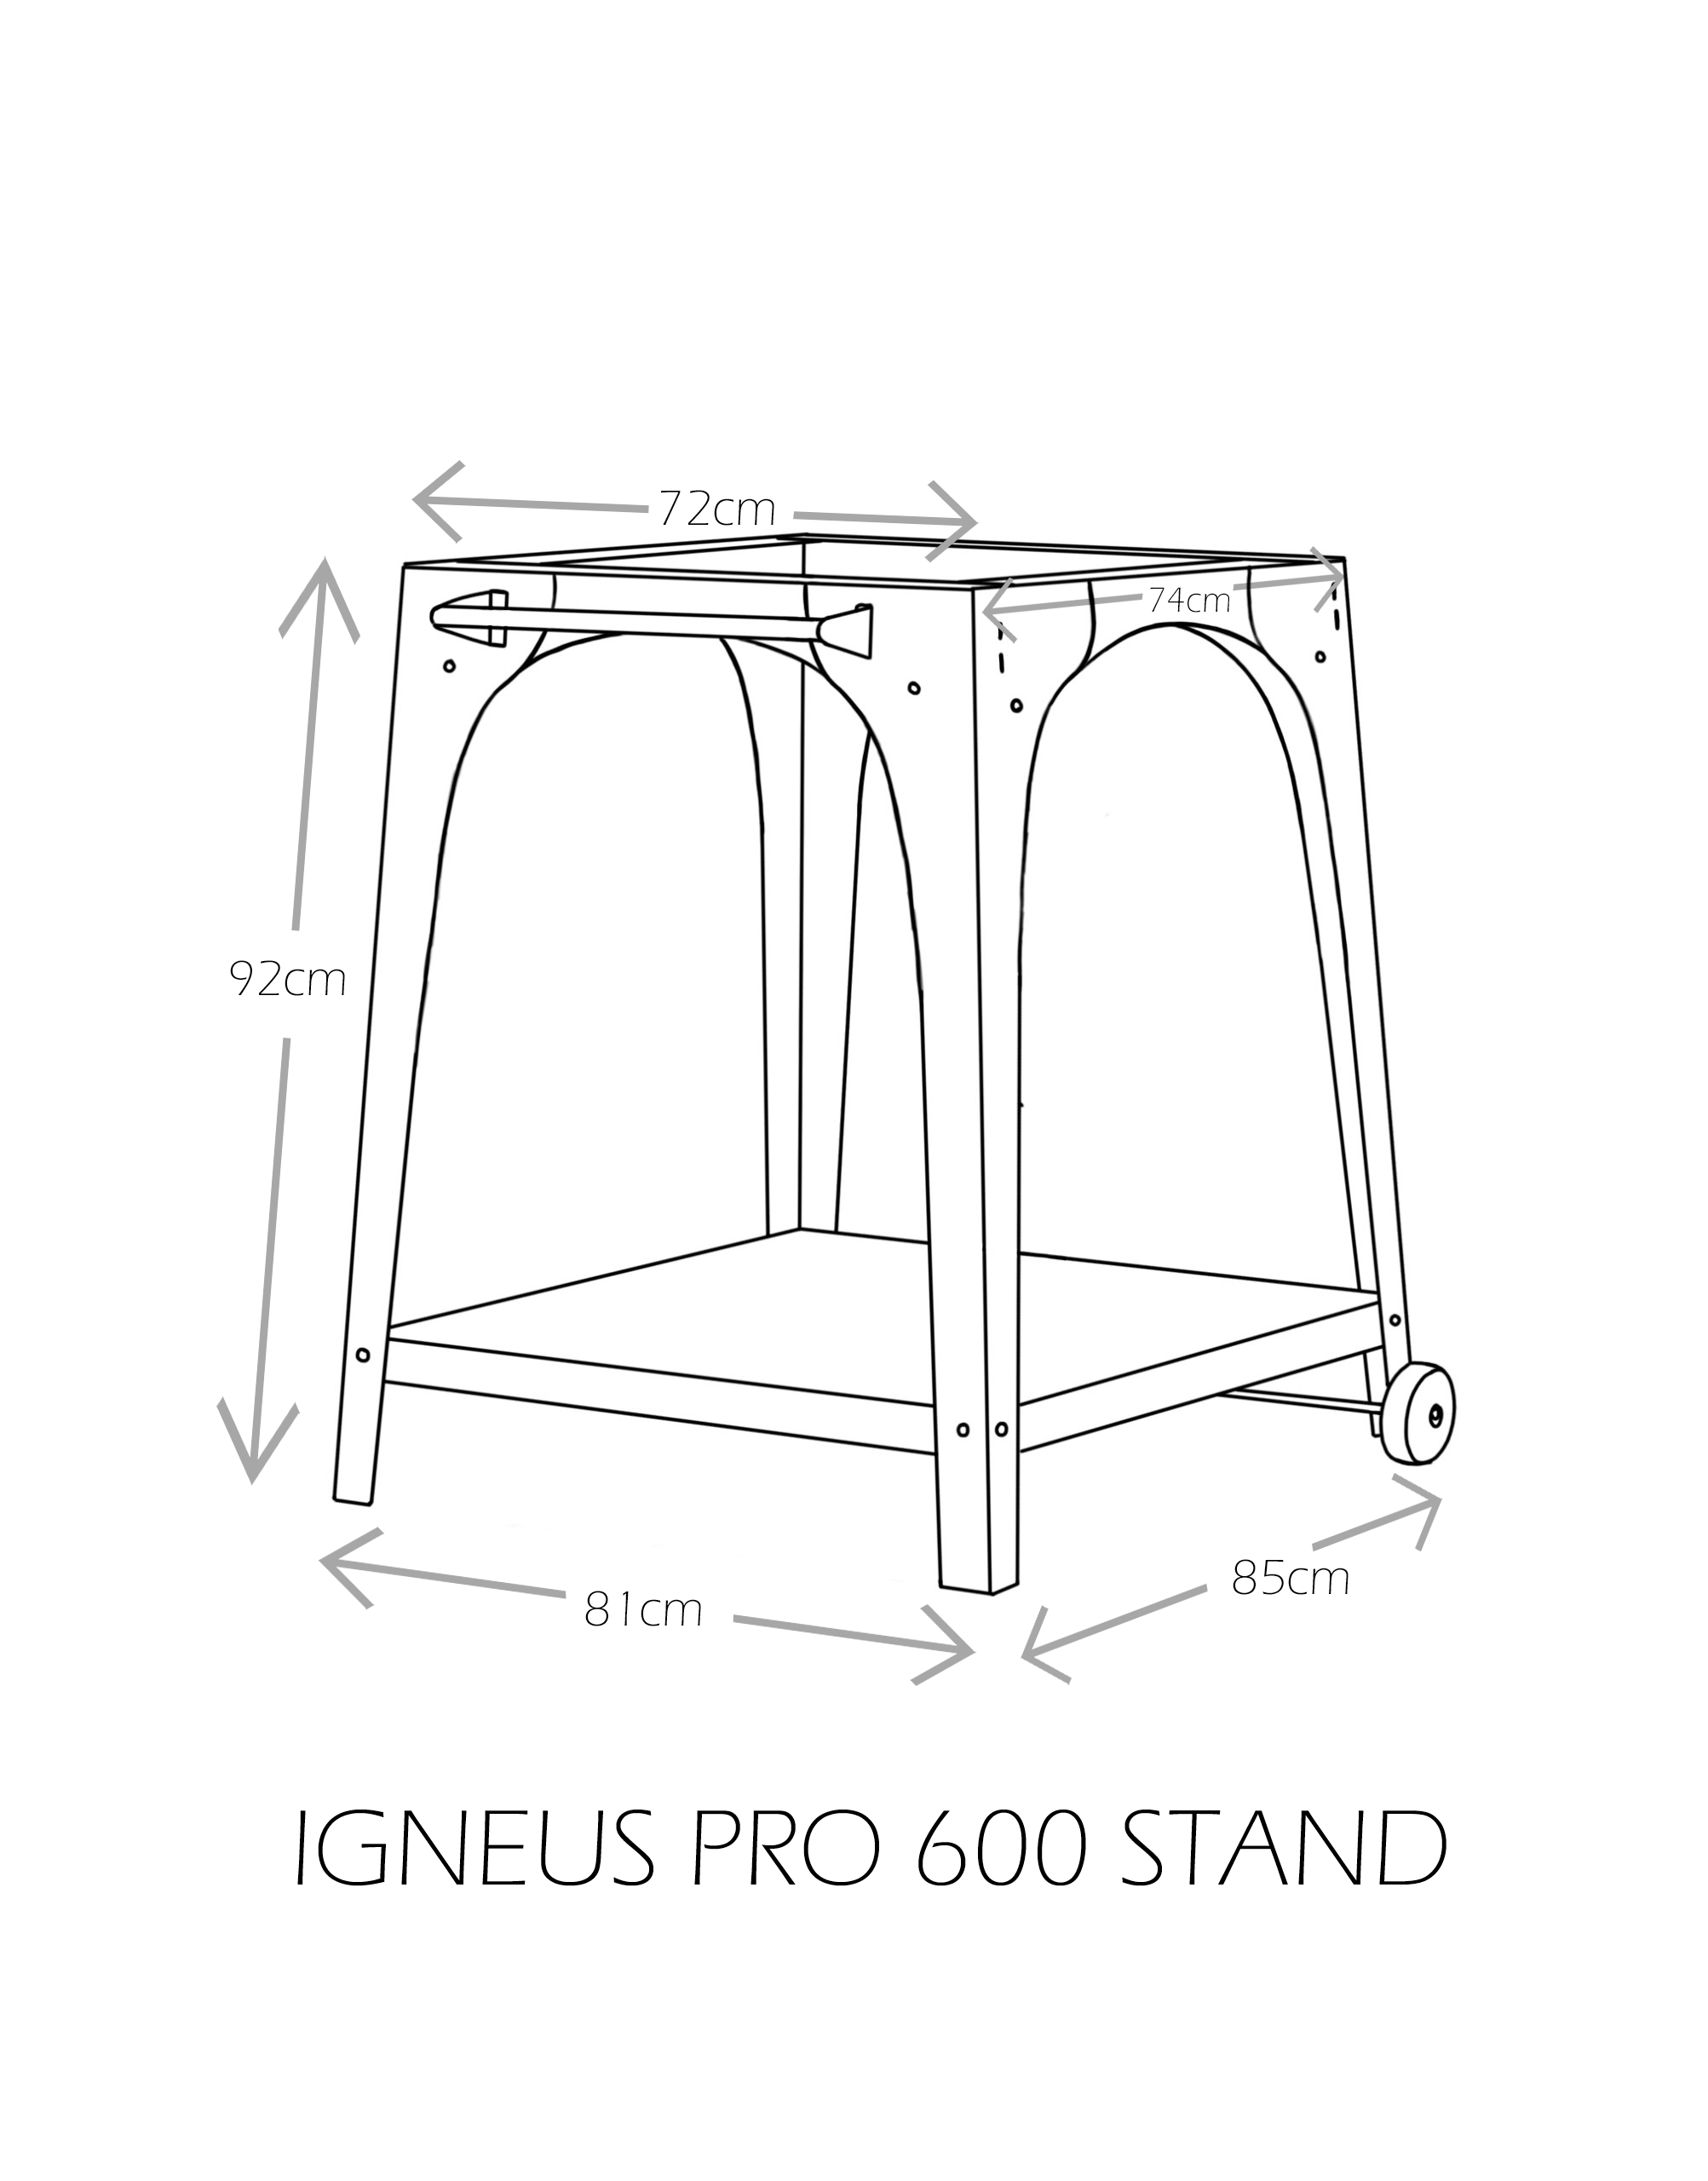 Igneus Pro 600 Stand - Dimensions